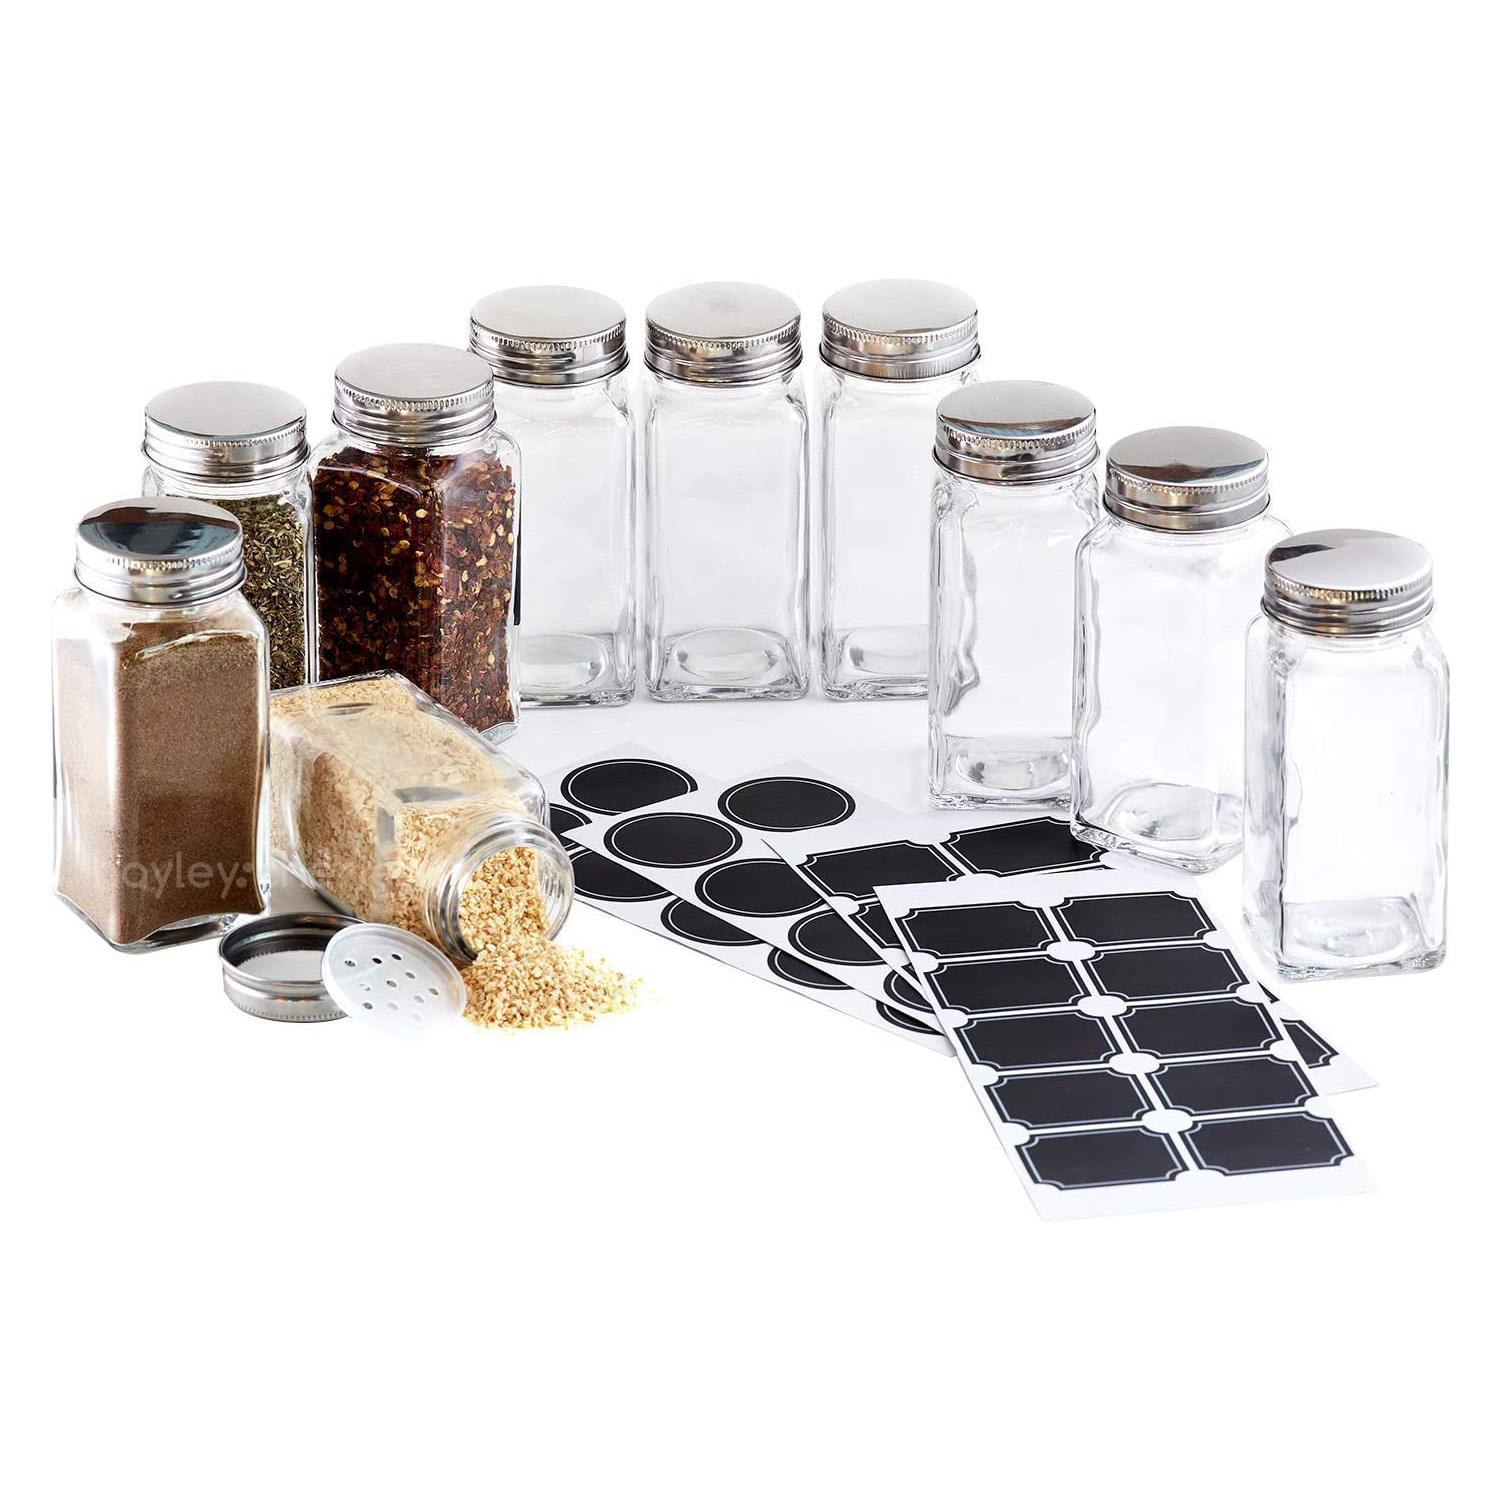 16 Pack 4 oz Glass Spice & Salts Jars Bottles, Clear Square Glass